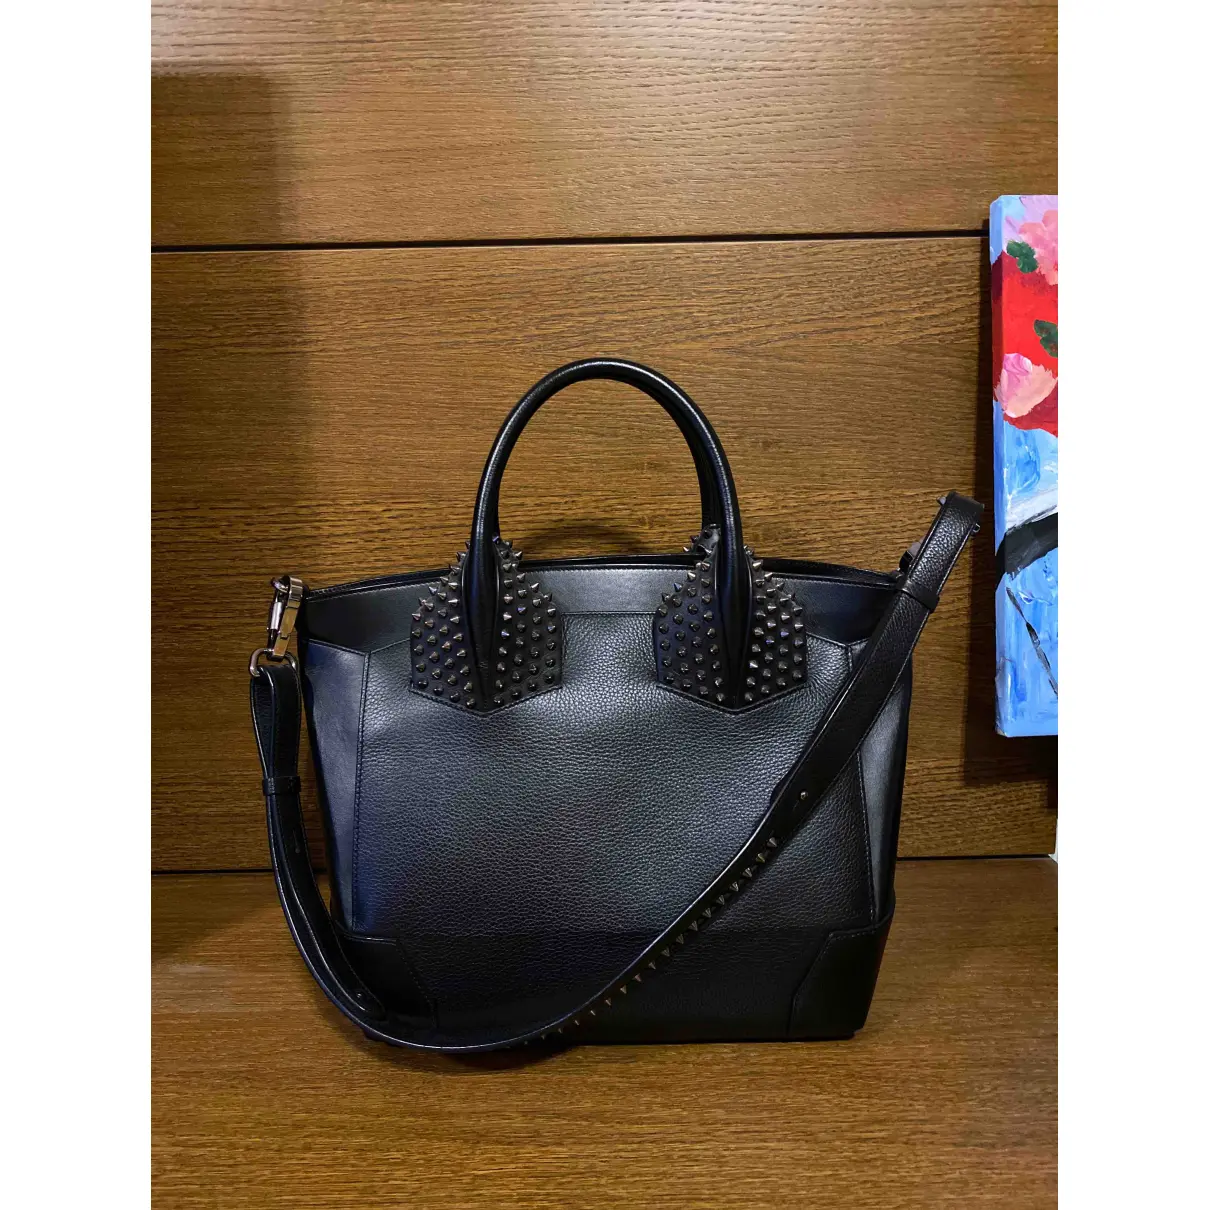 Buy Christian Louboutin Éloïse leather handbag online